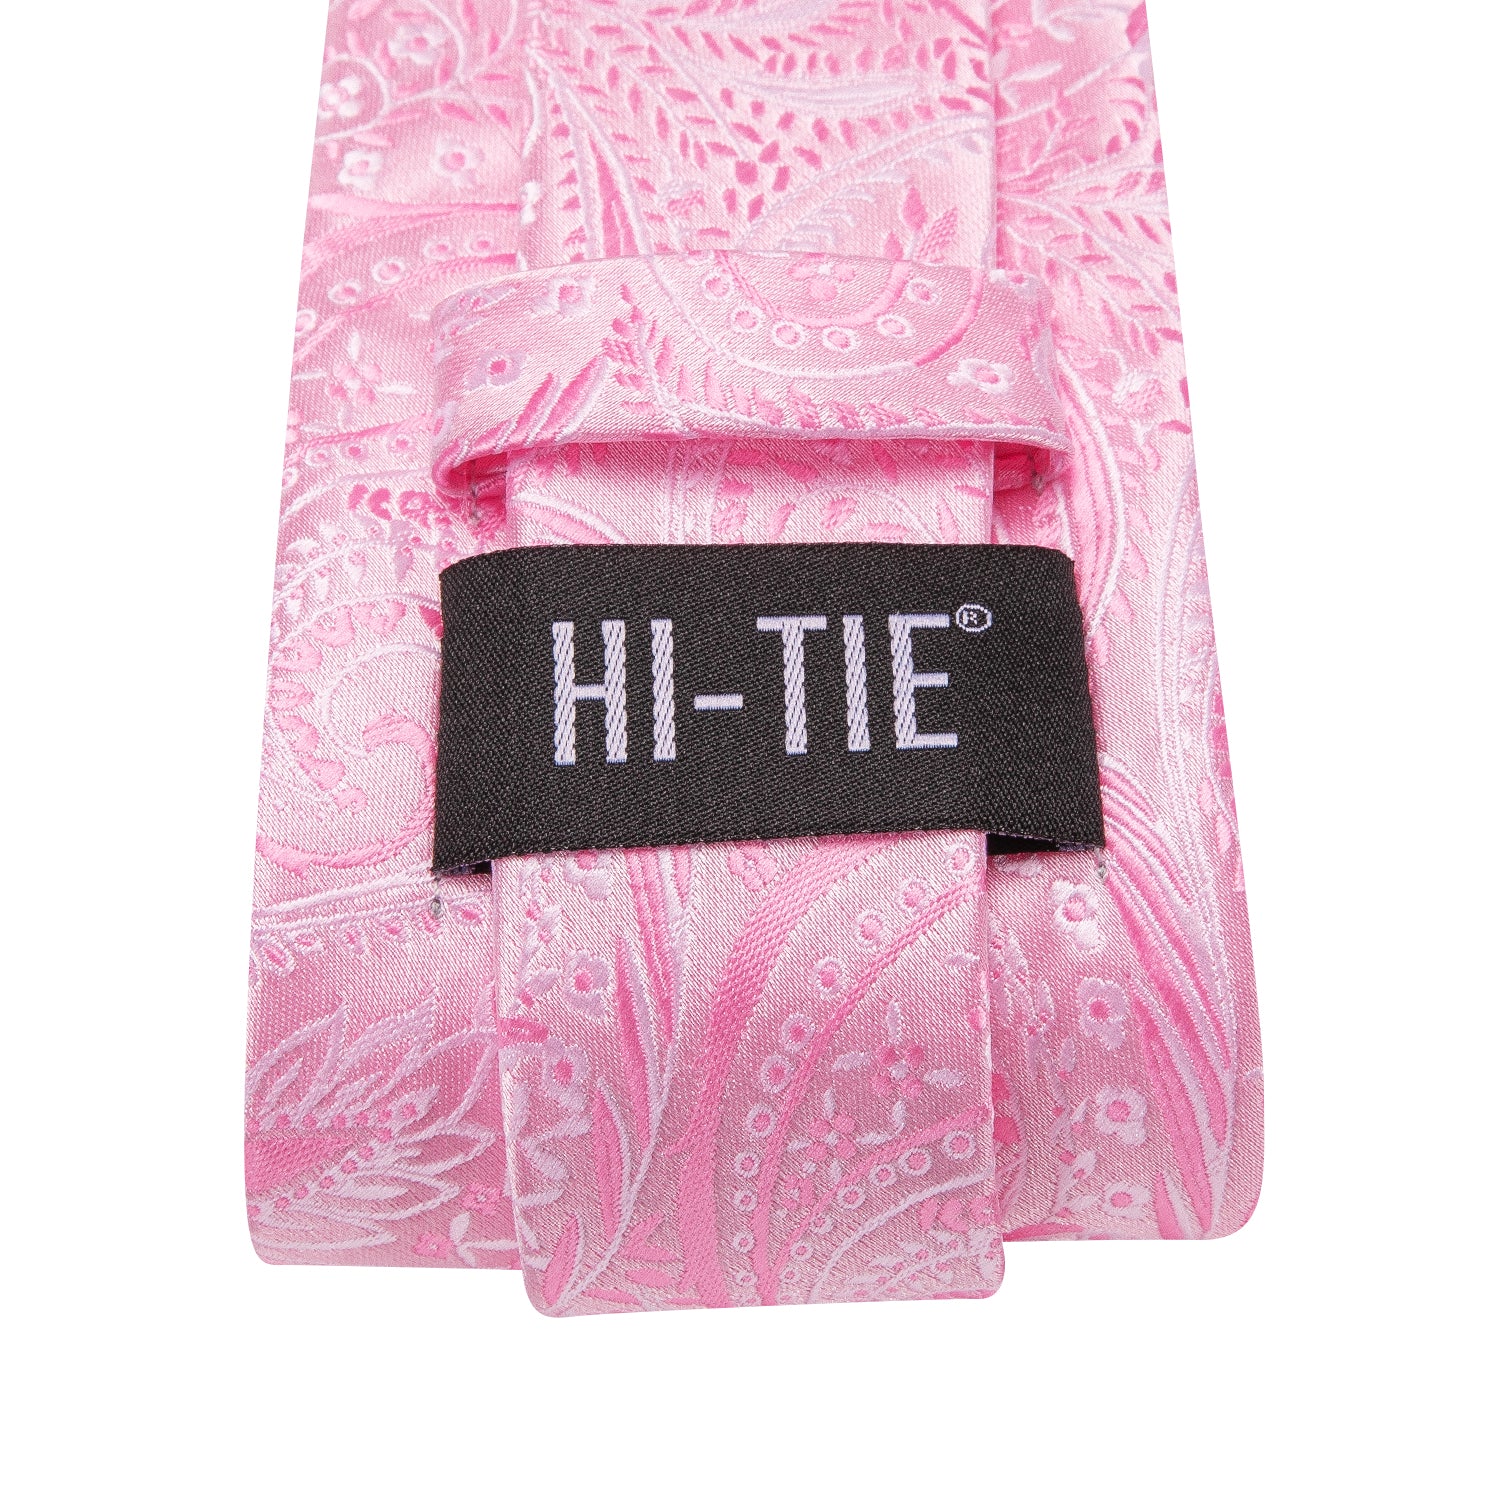 Baby Pink Paisley 67 Inches Extra Long Tie Handkerchief Cufflinks Set